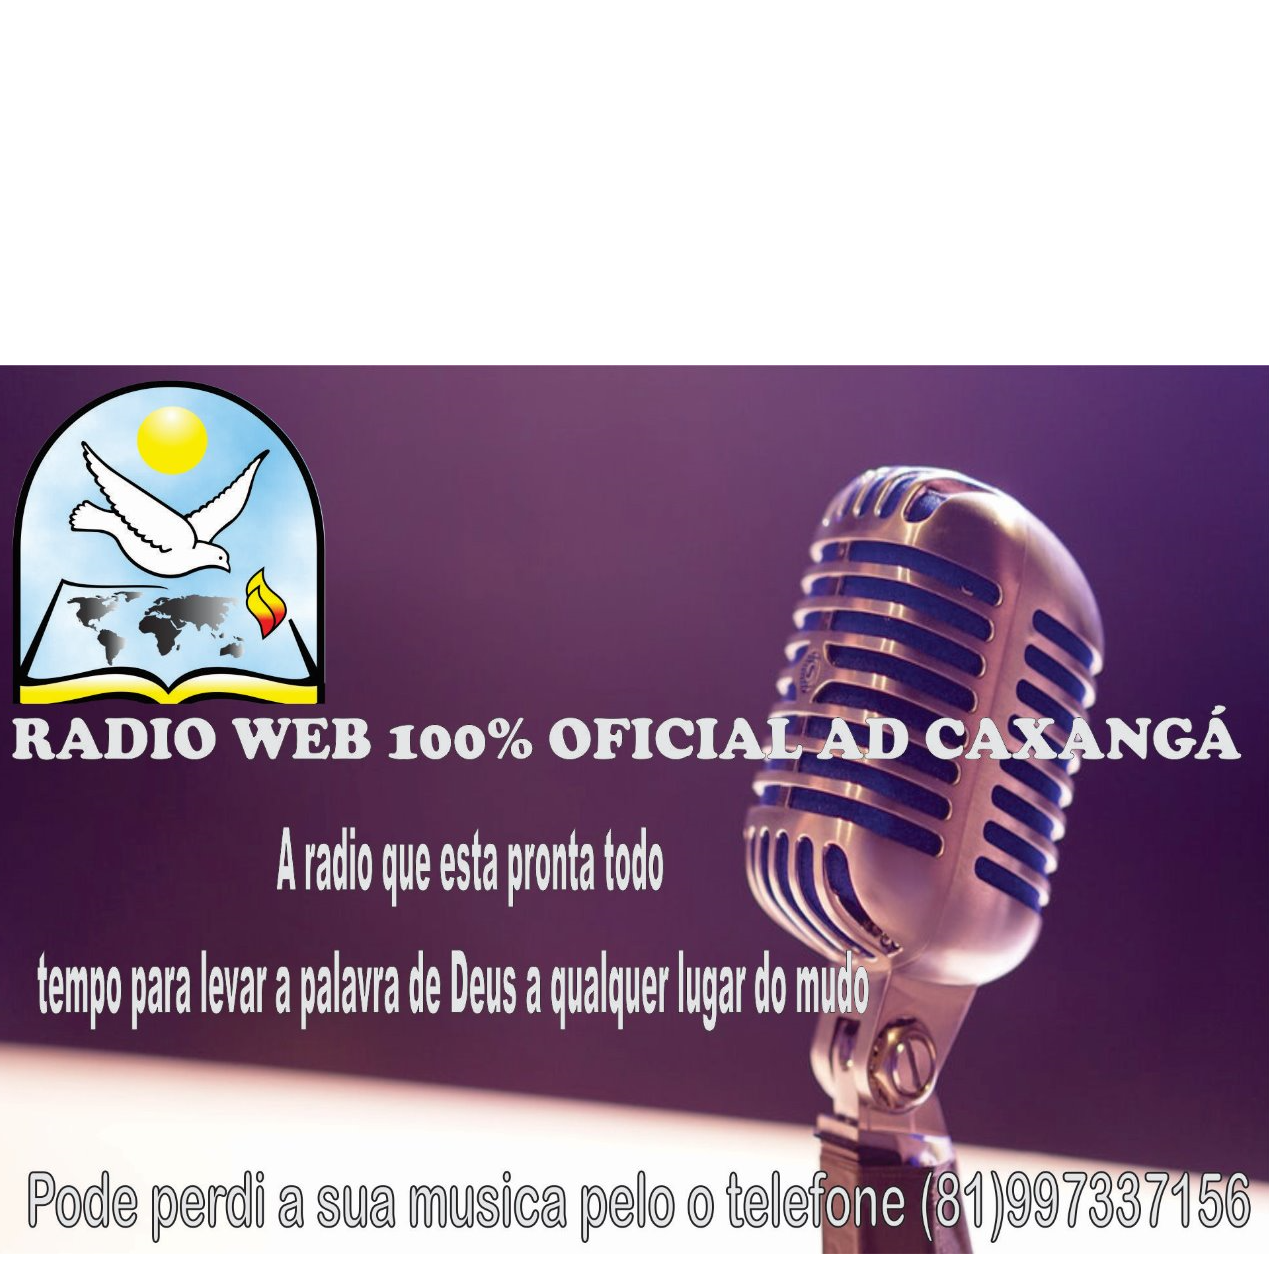 Radio web 100% Oficial ad caxanga